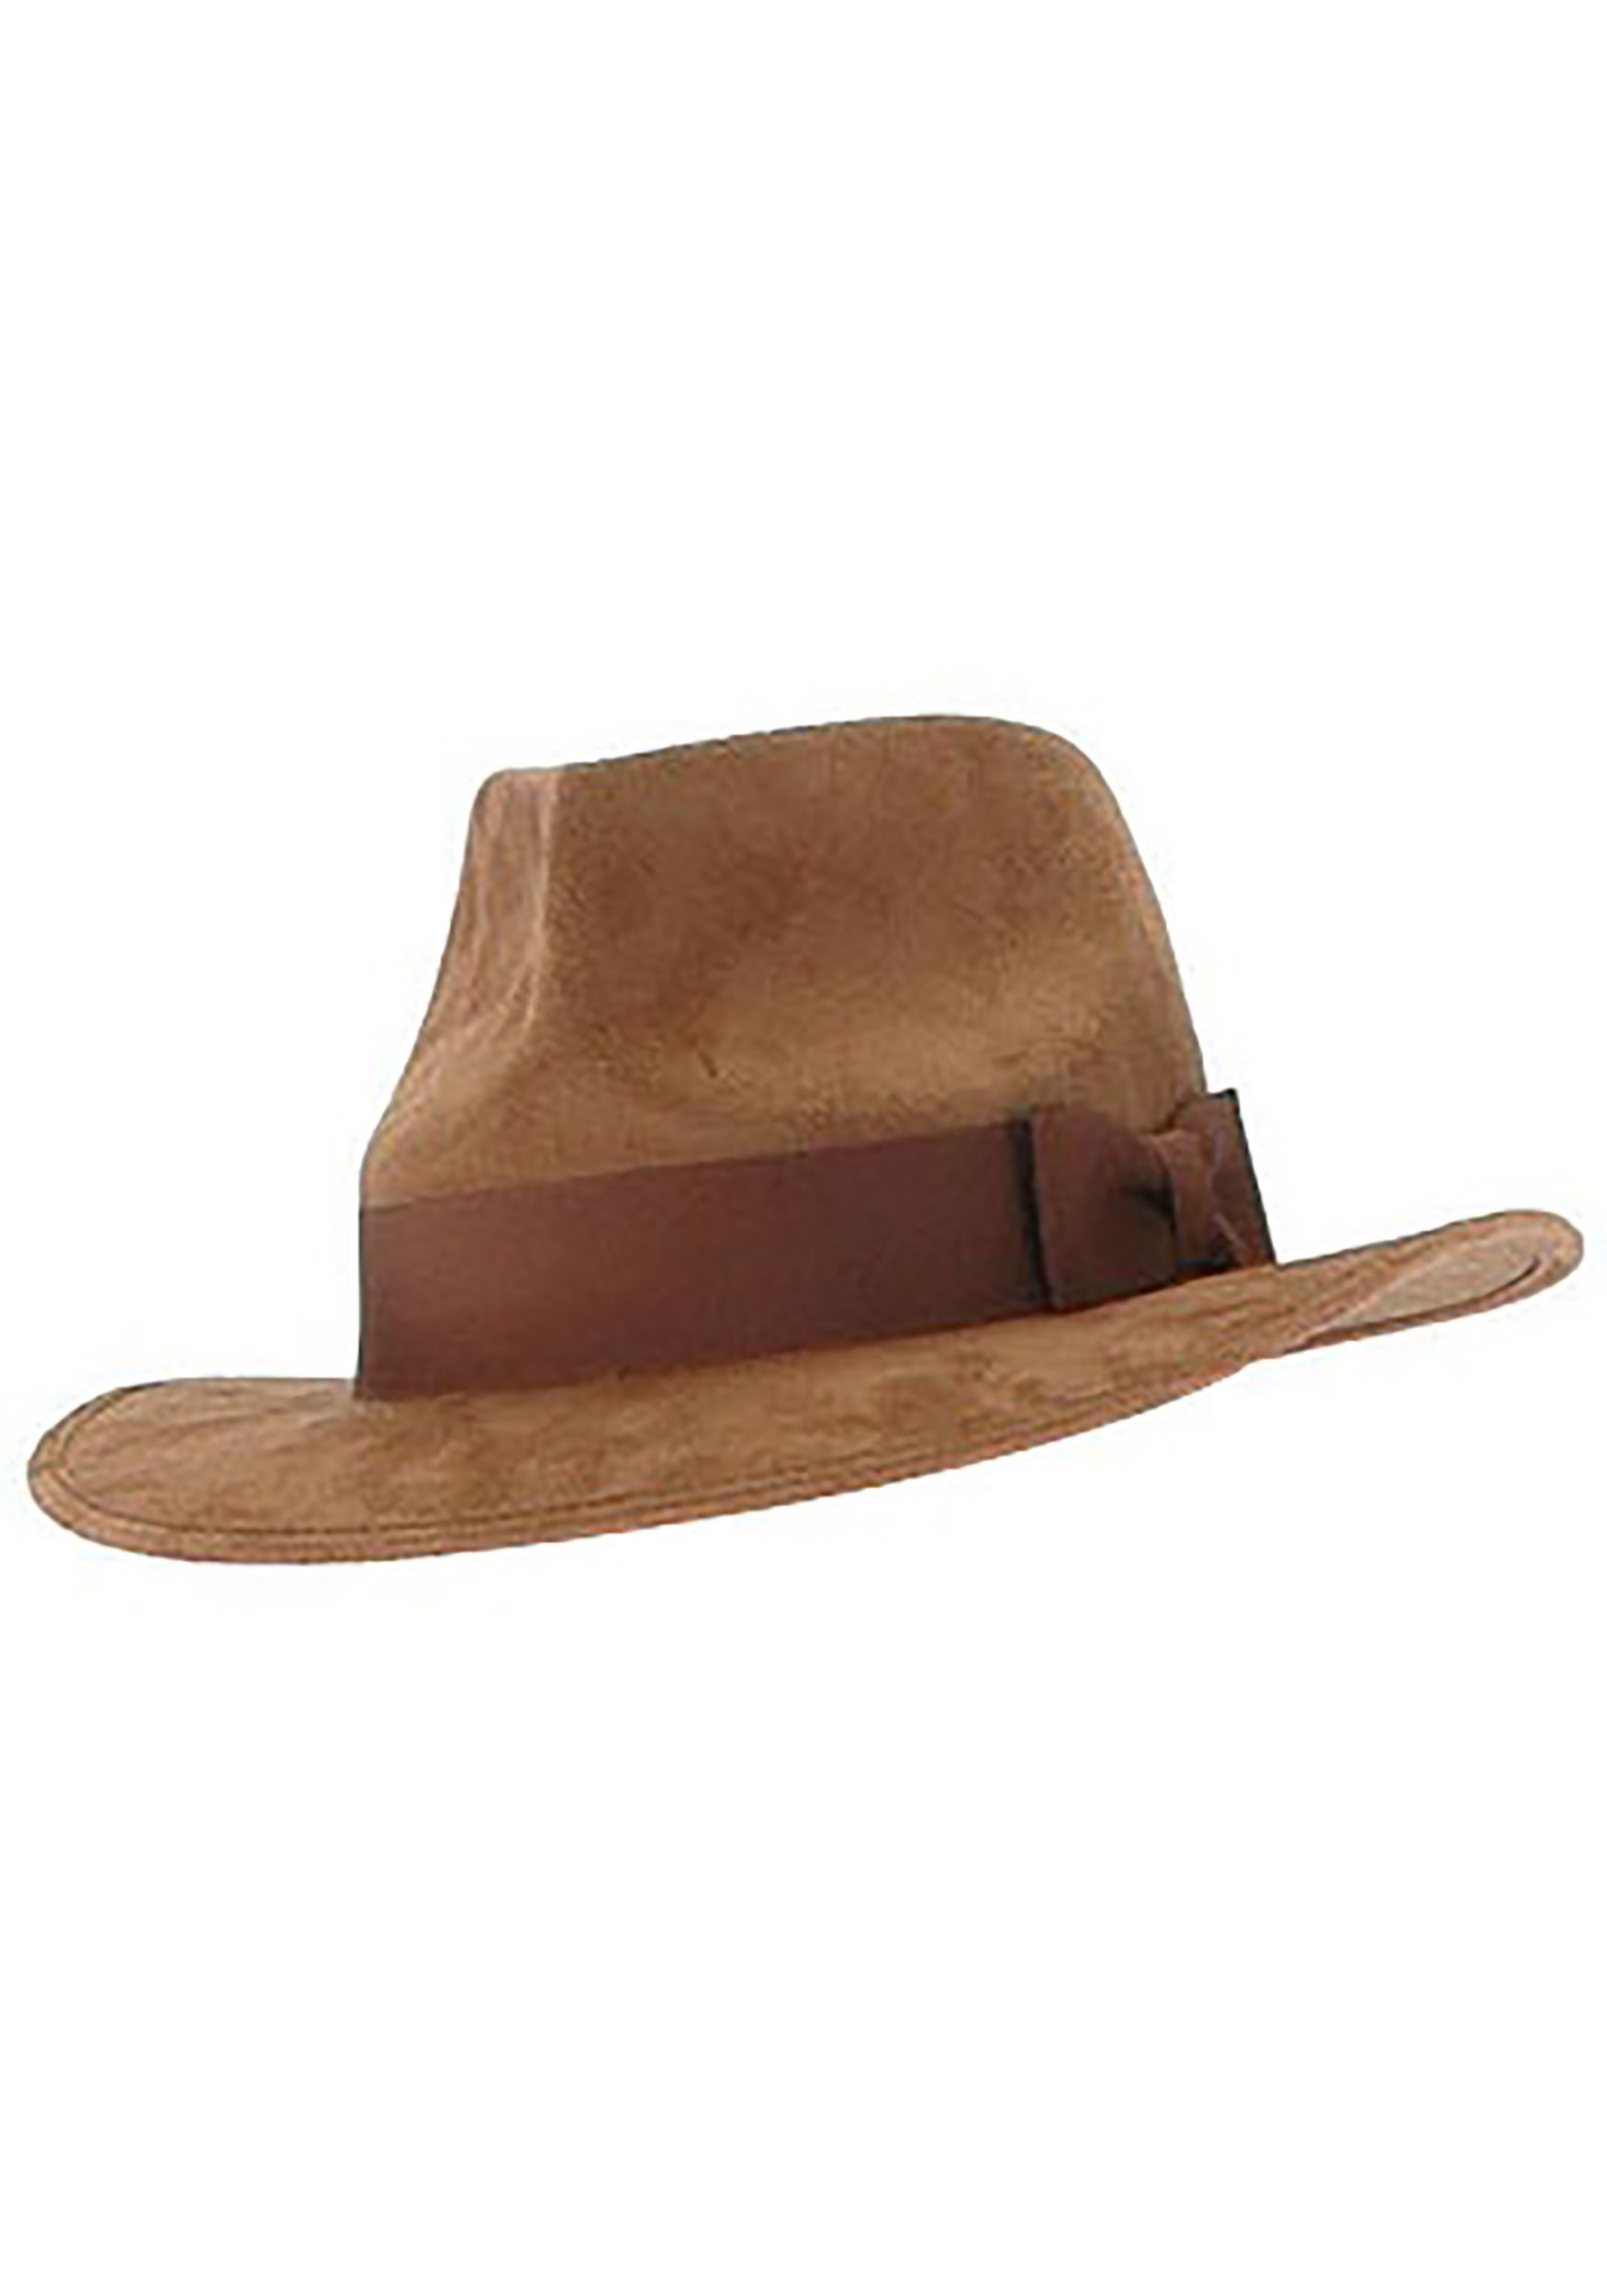 https://images.fun.com/products/3391/1-1/mens-brown-adventure-fedora-hat.jpg